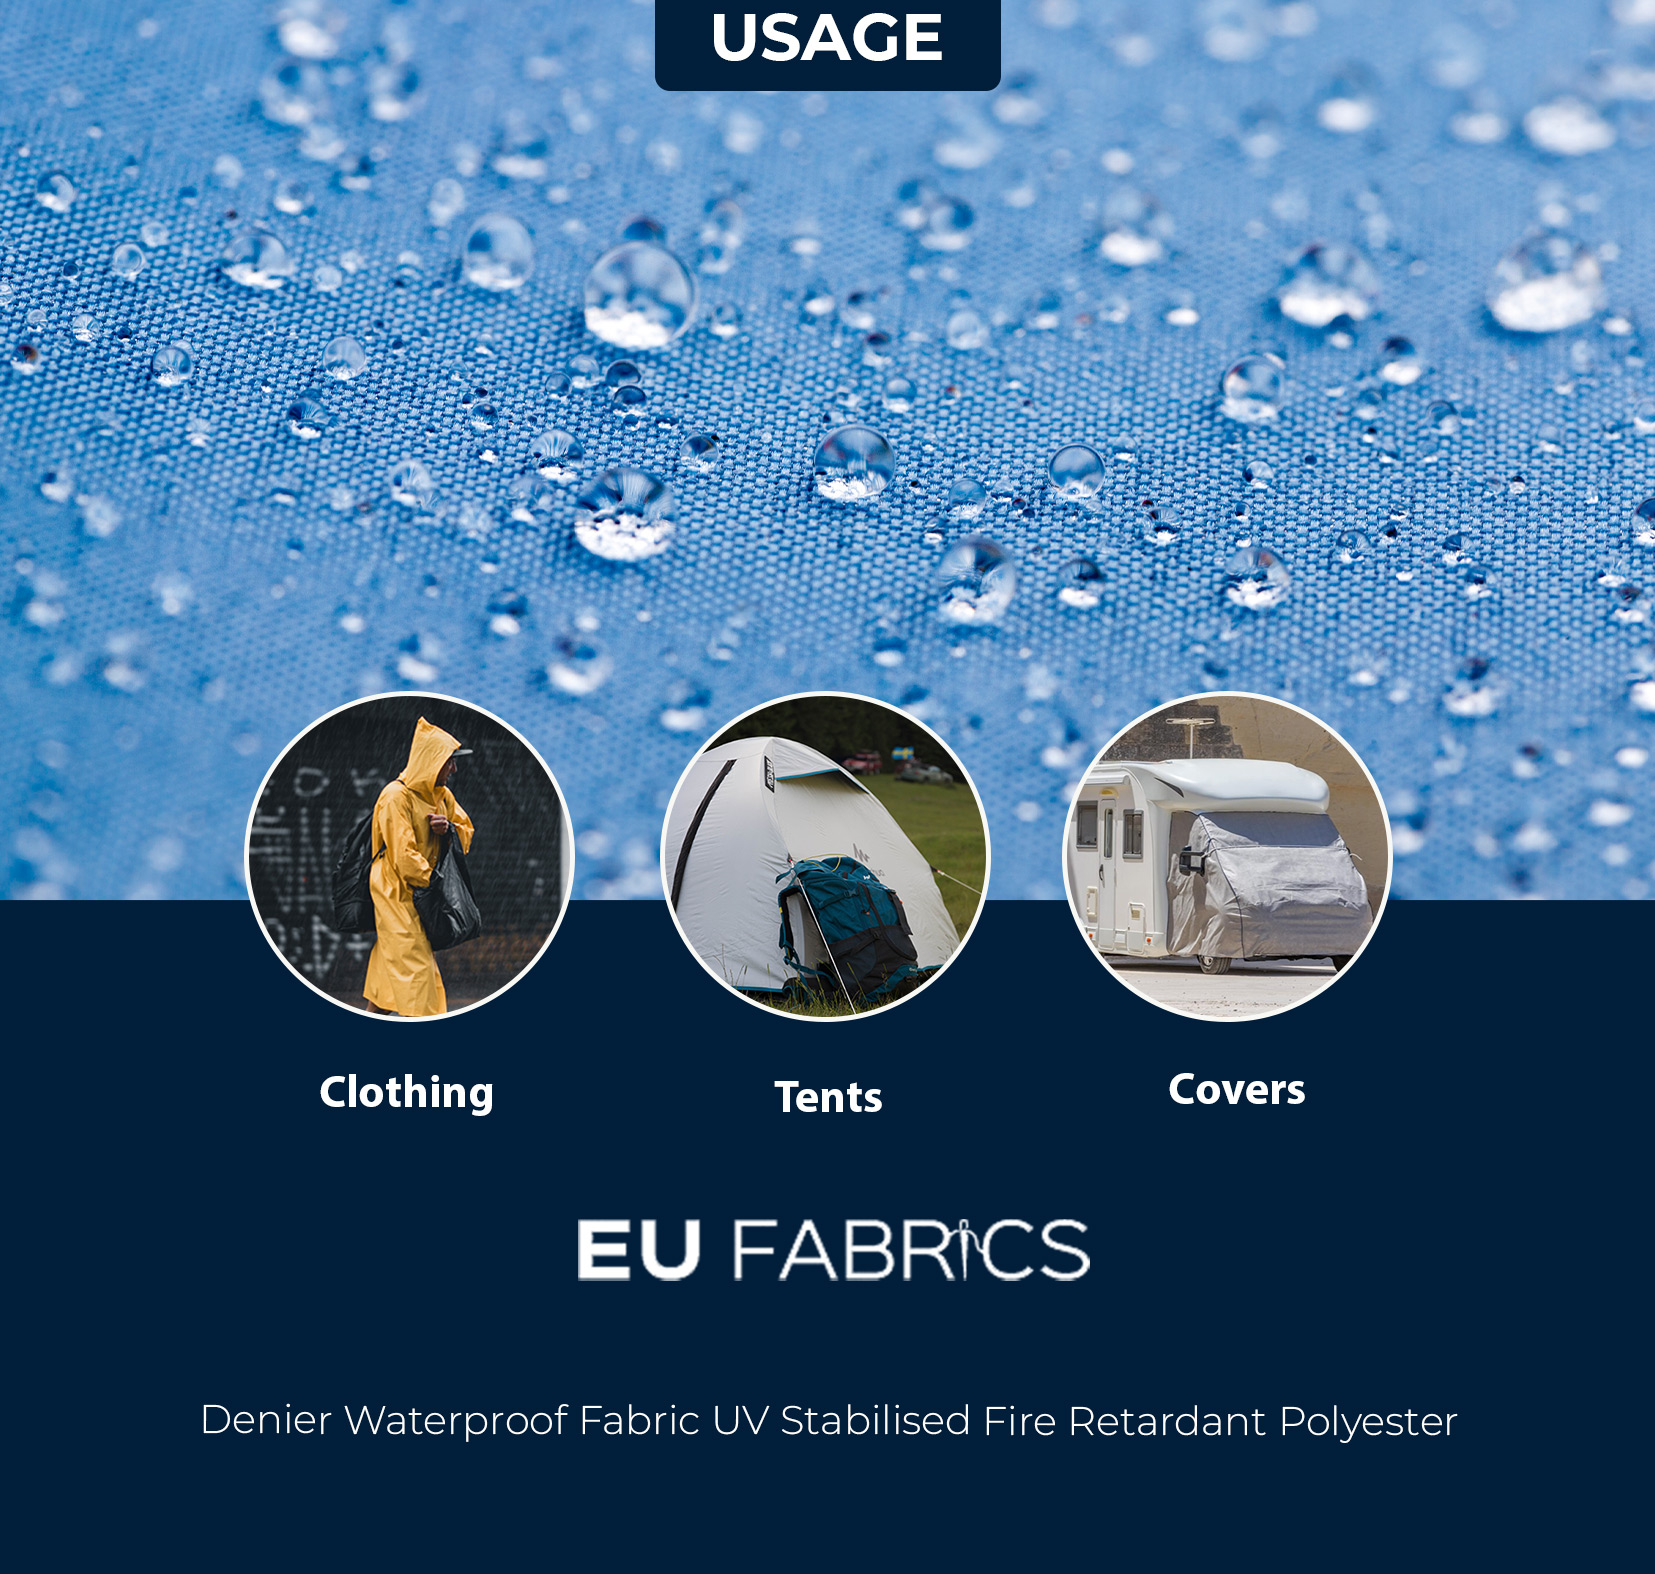 7oz 500 Denier Waterproof Fabric UV Stabilised Fire Retardant Polyester Usage